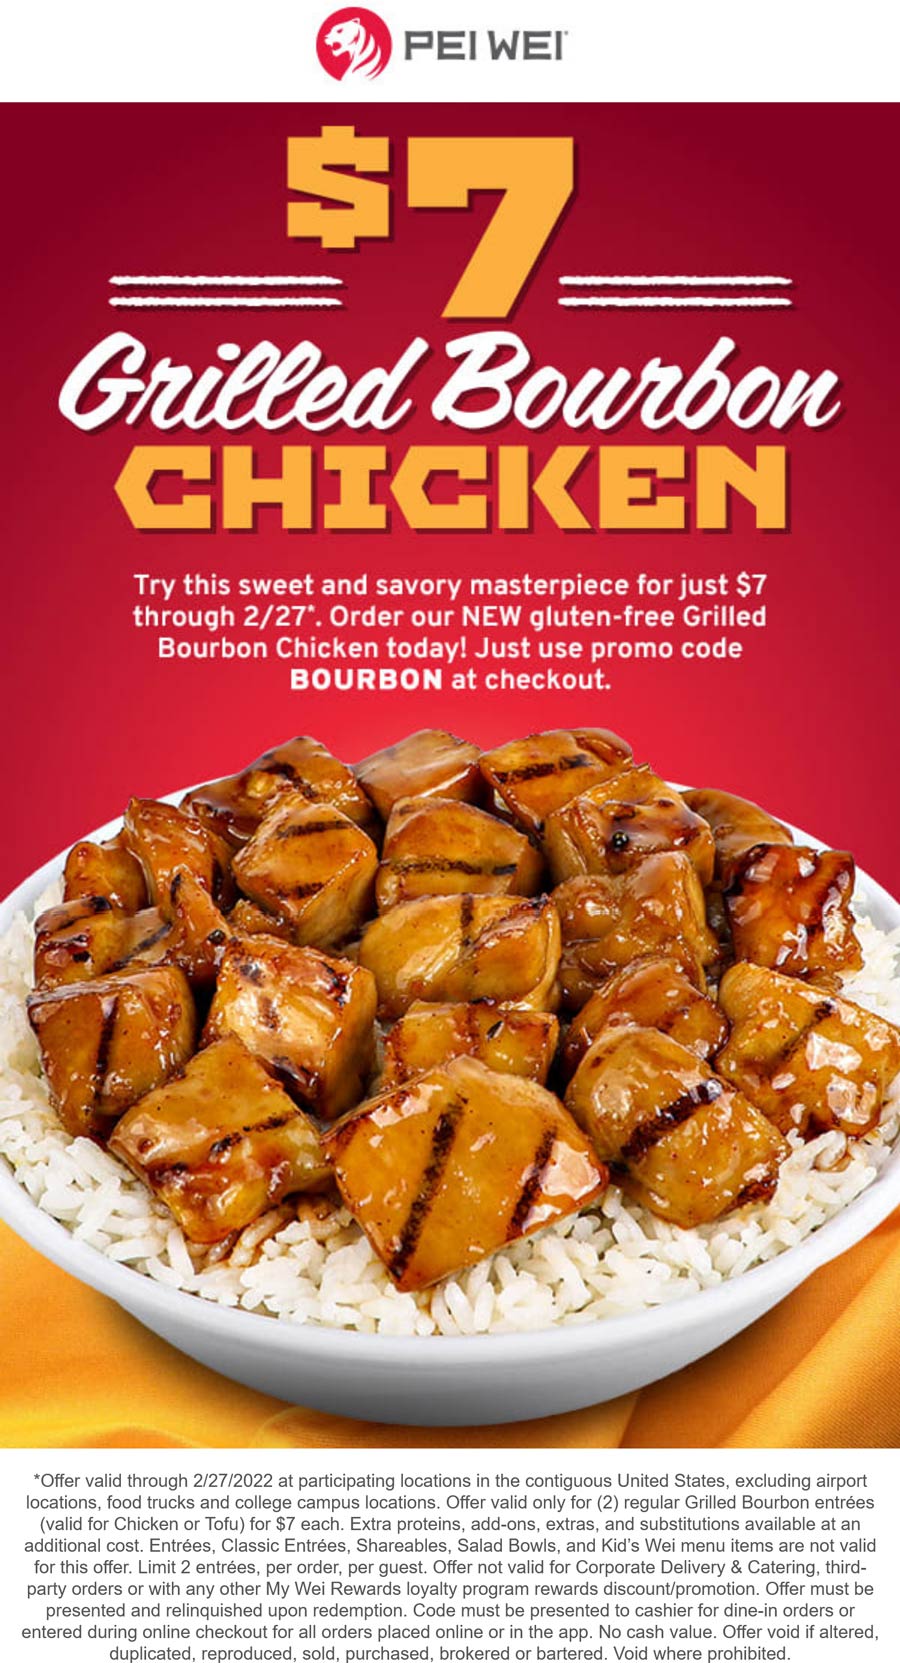 Pei Wei restaurants Coupon  Grilled bourbon chicken entree = $7 at Pei Wei via promo code BOURBON #peiwei 